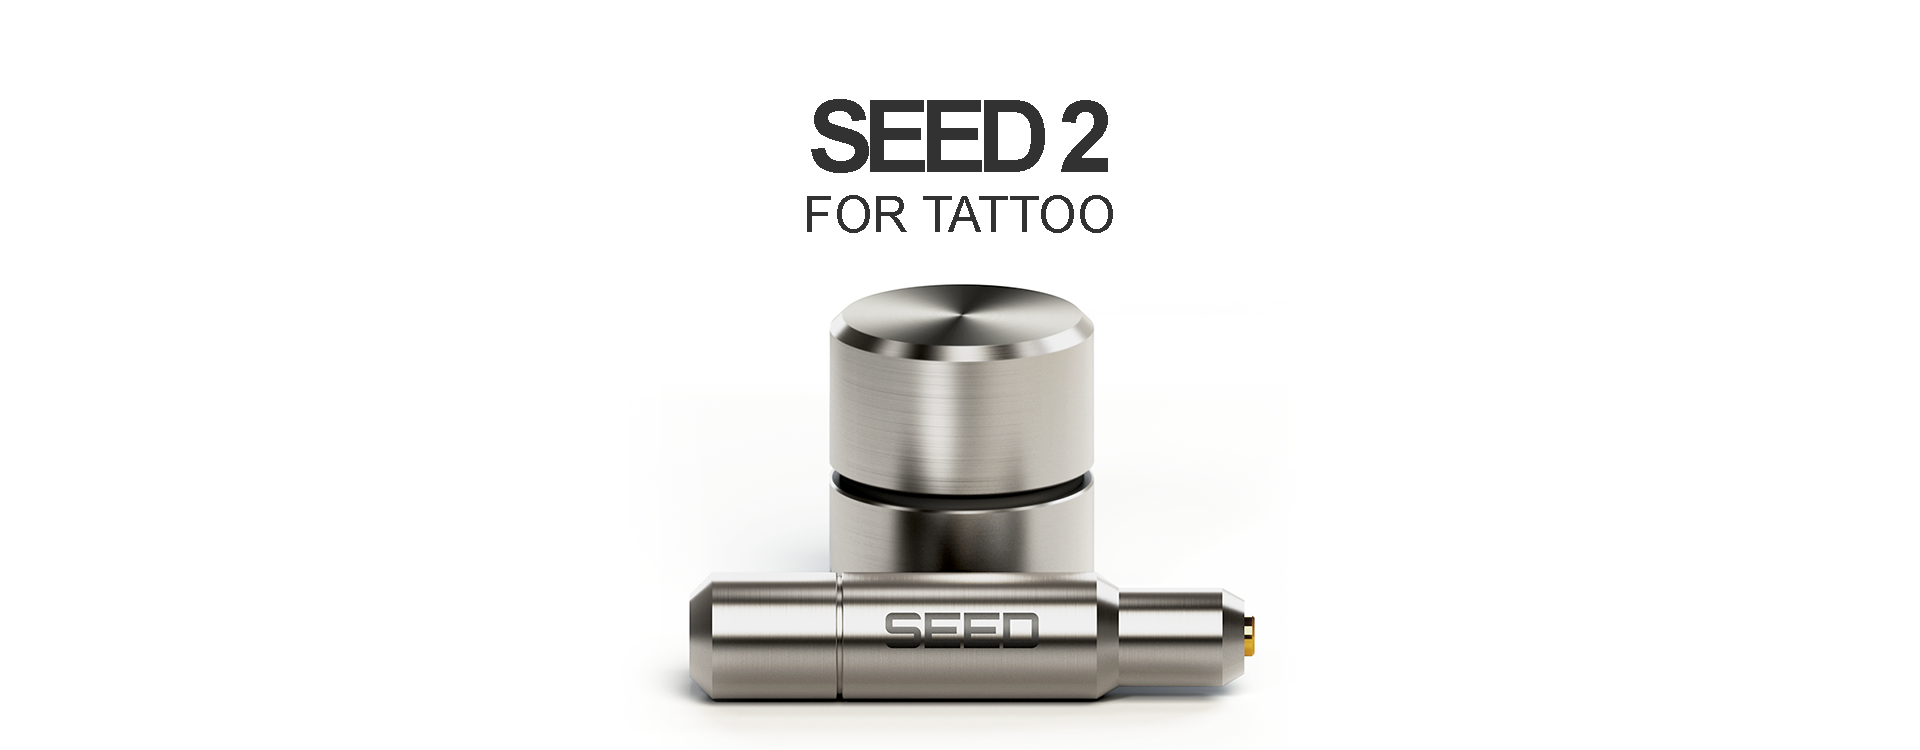 Seed 2 tattoo machine